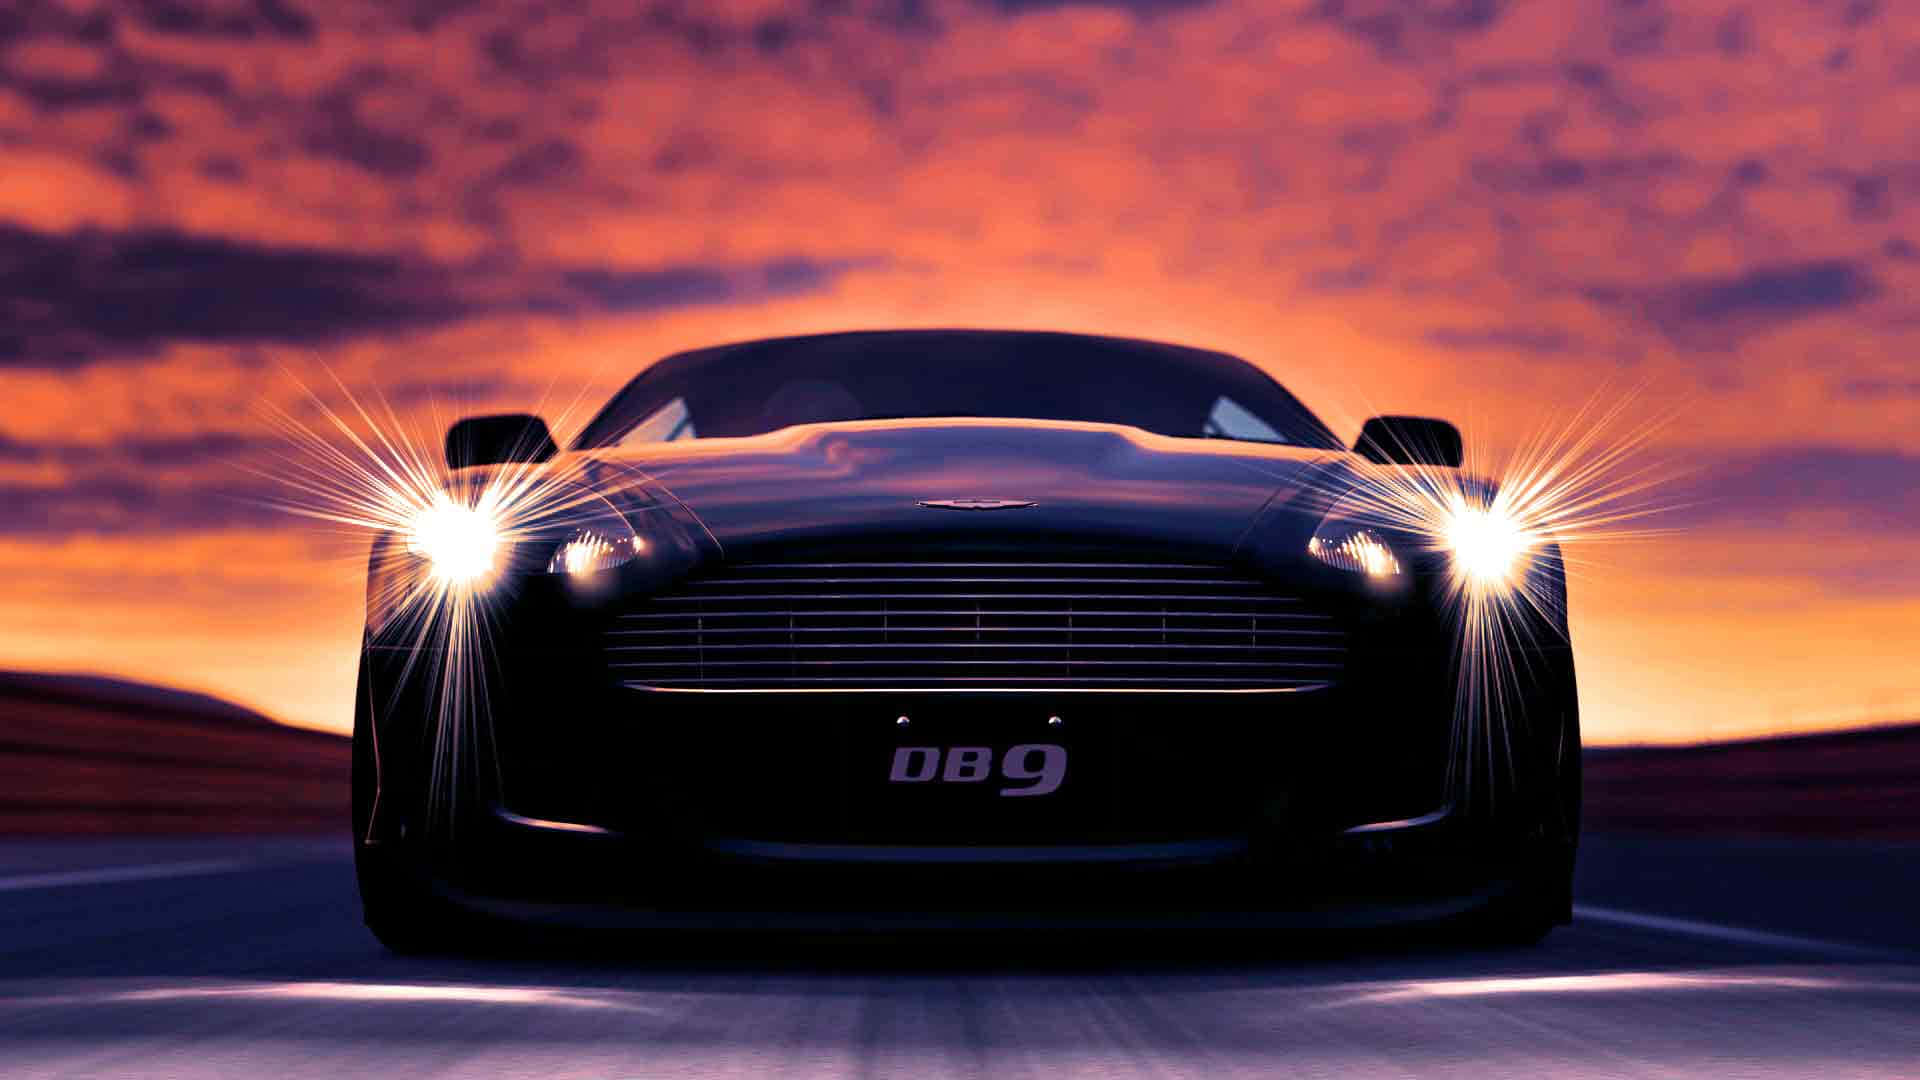 Stunning Aston Martin DB9 On The Road Wallpaper